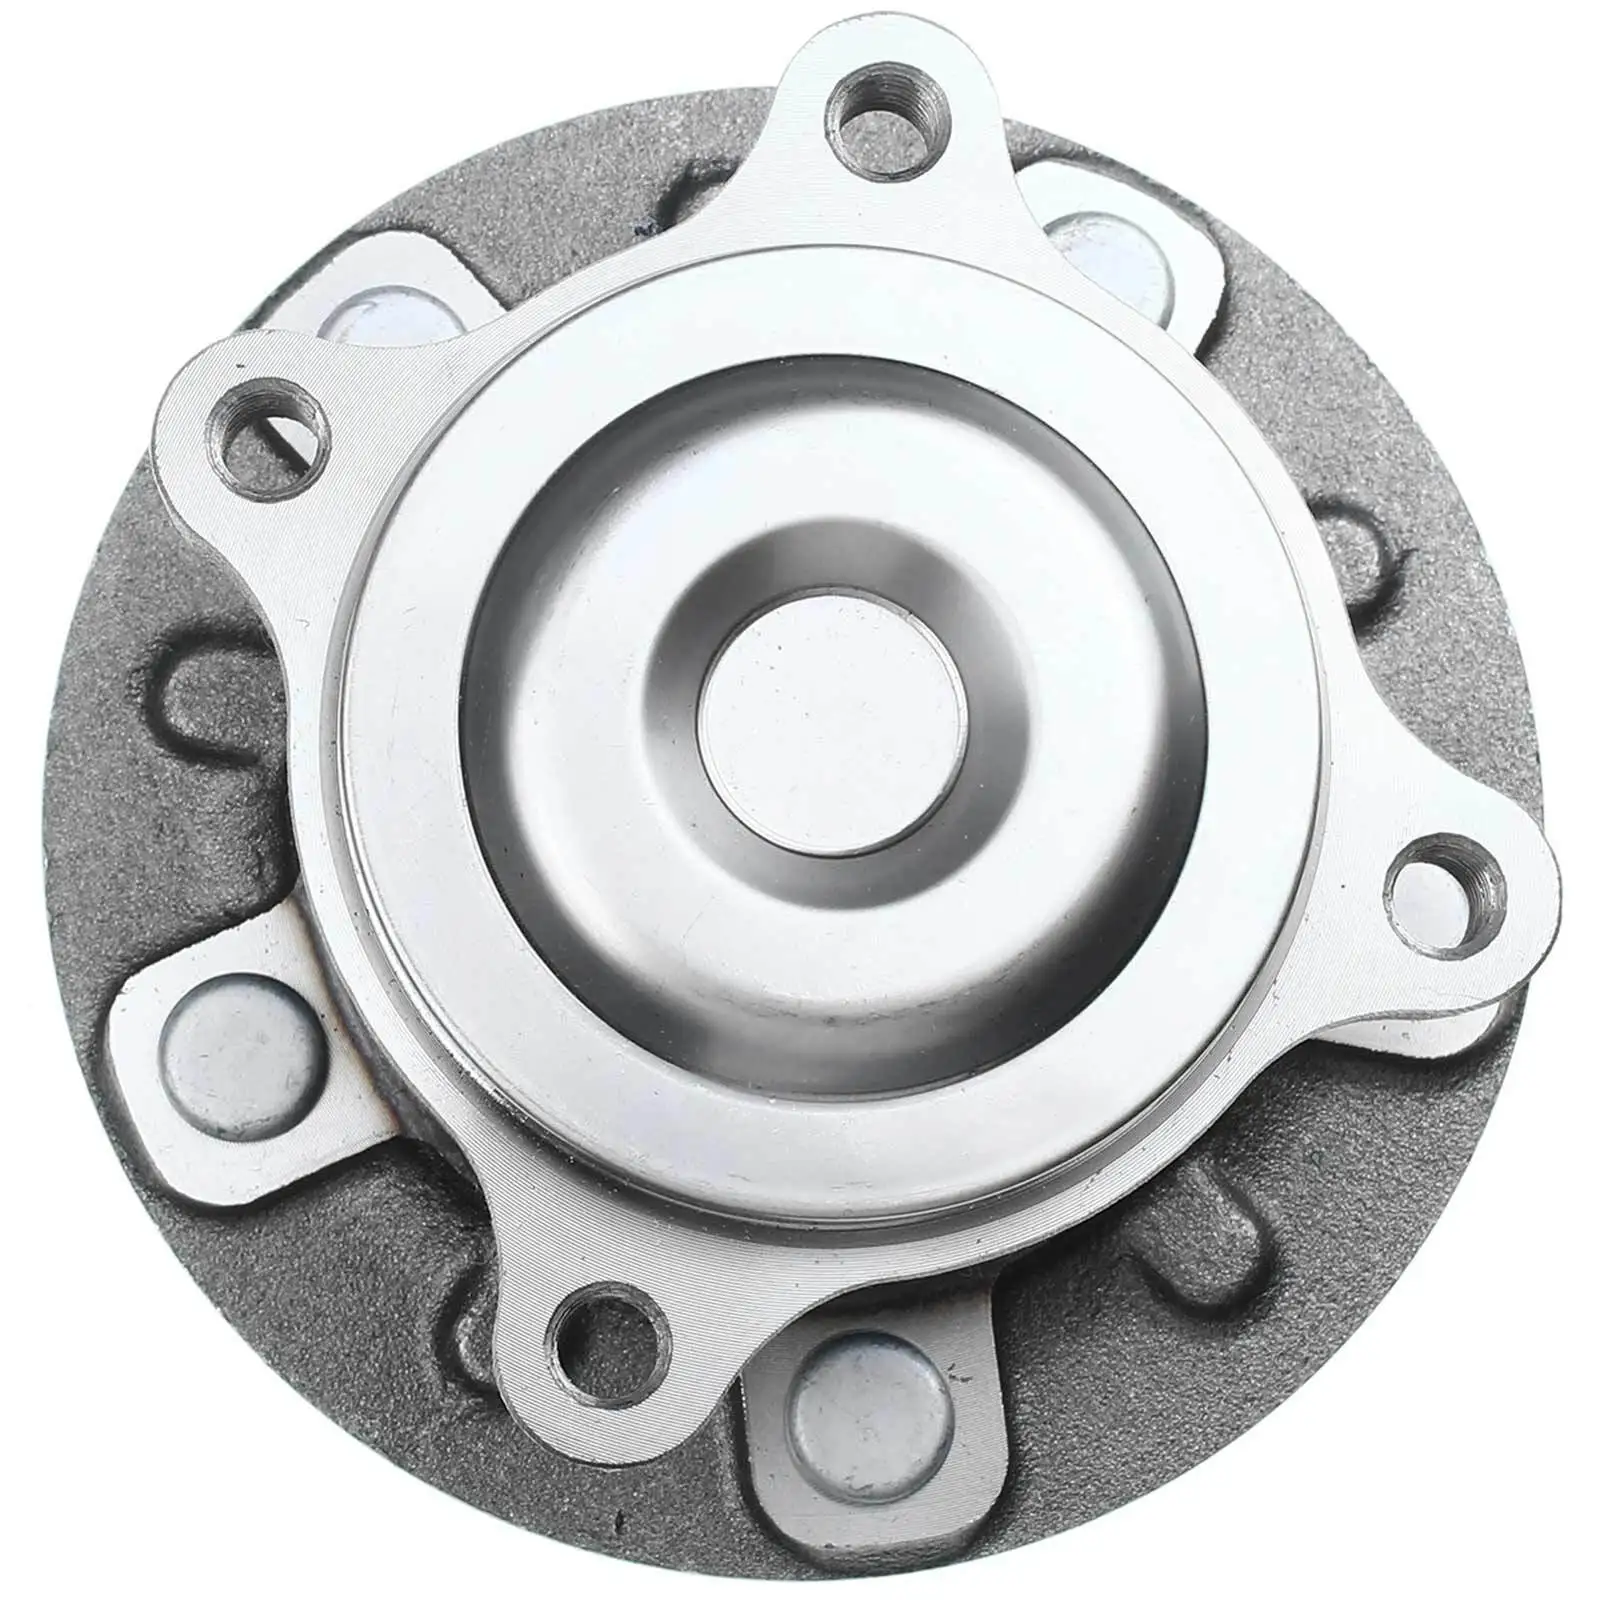 

A3 Repair Shop Rear LH or RH Wheel Hub Bearing Assembly for Buick Verano Cascad aChevrolet Volt